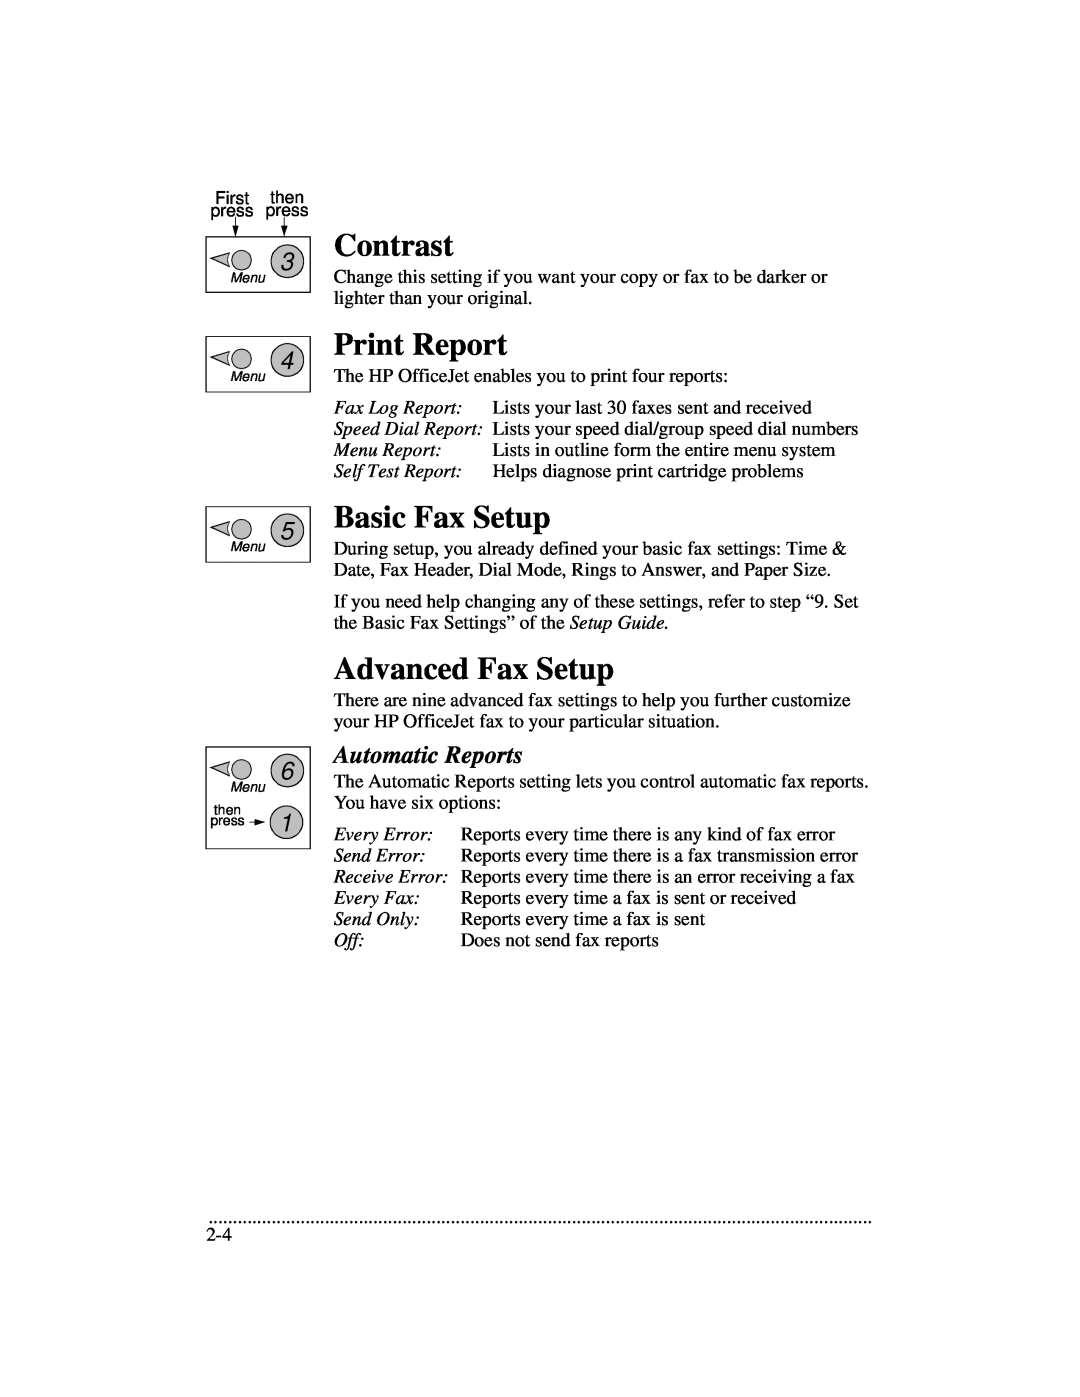 HP 700 manual Contrast, Print Report, Basic Fax Setup, Advanced Fax Setup, Automatic Reports 